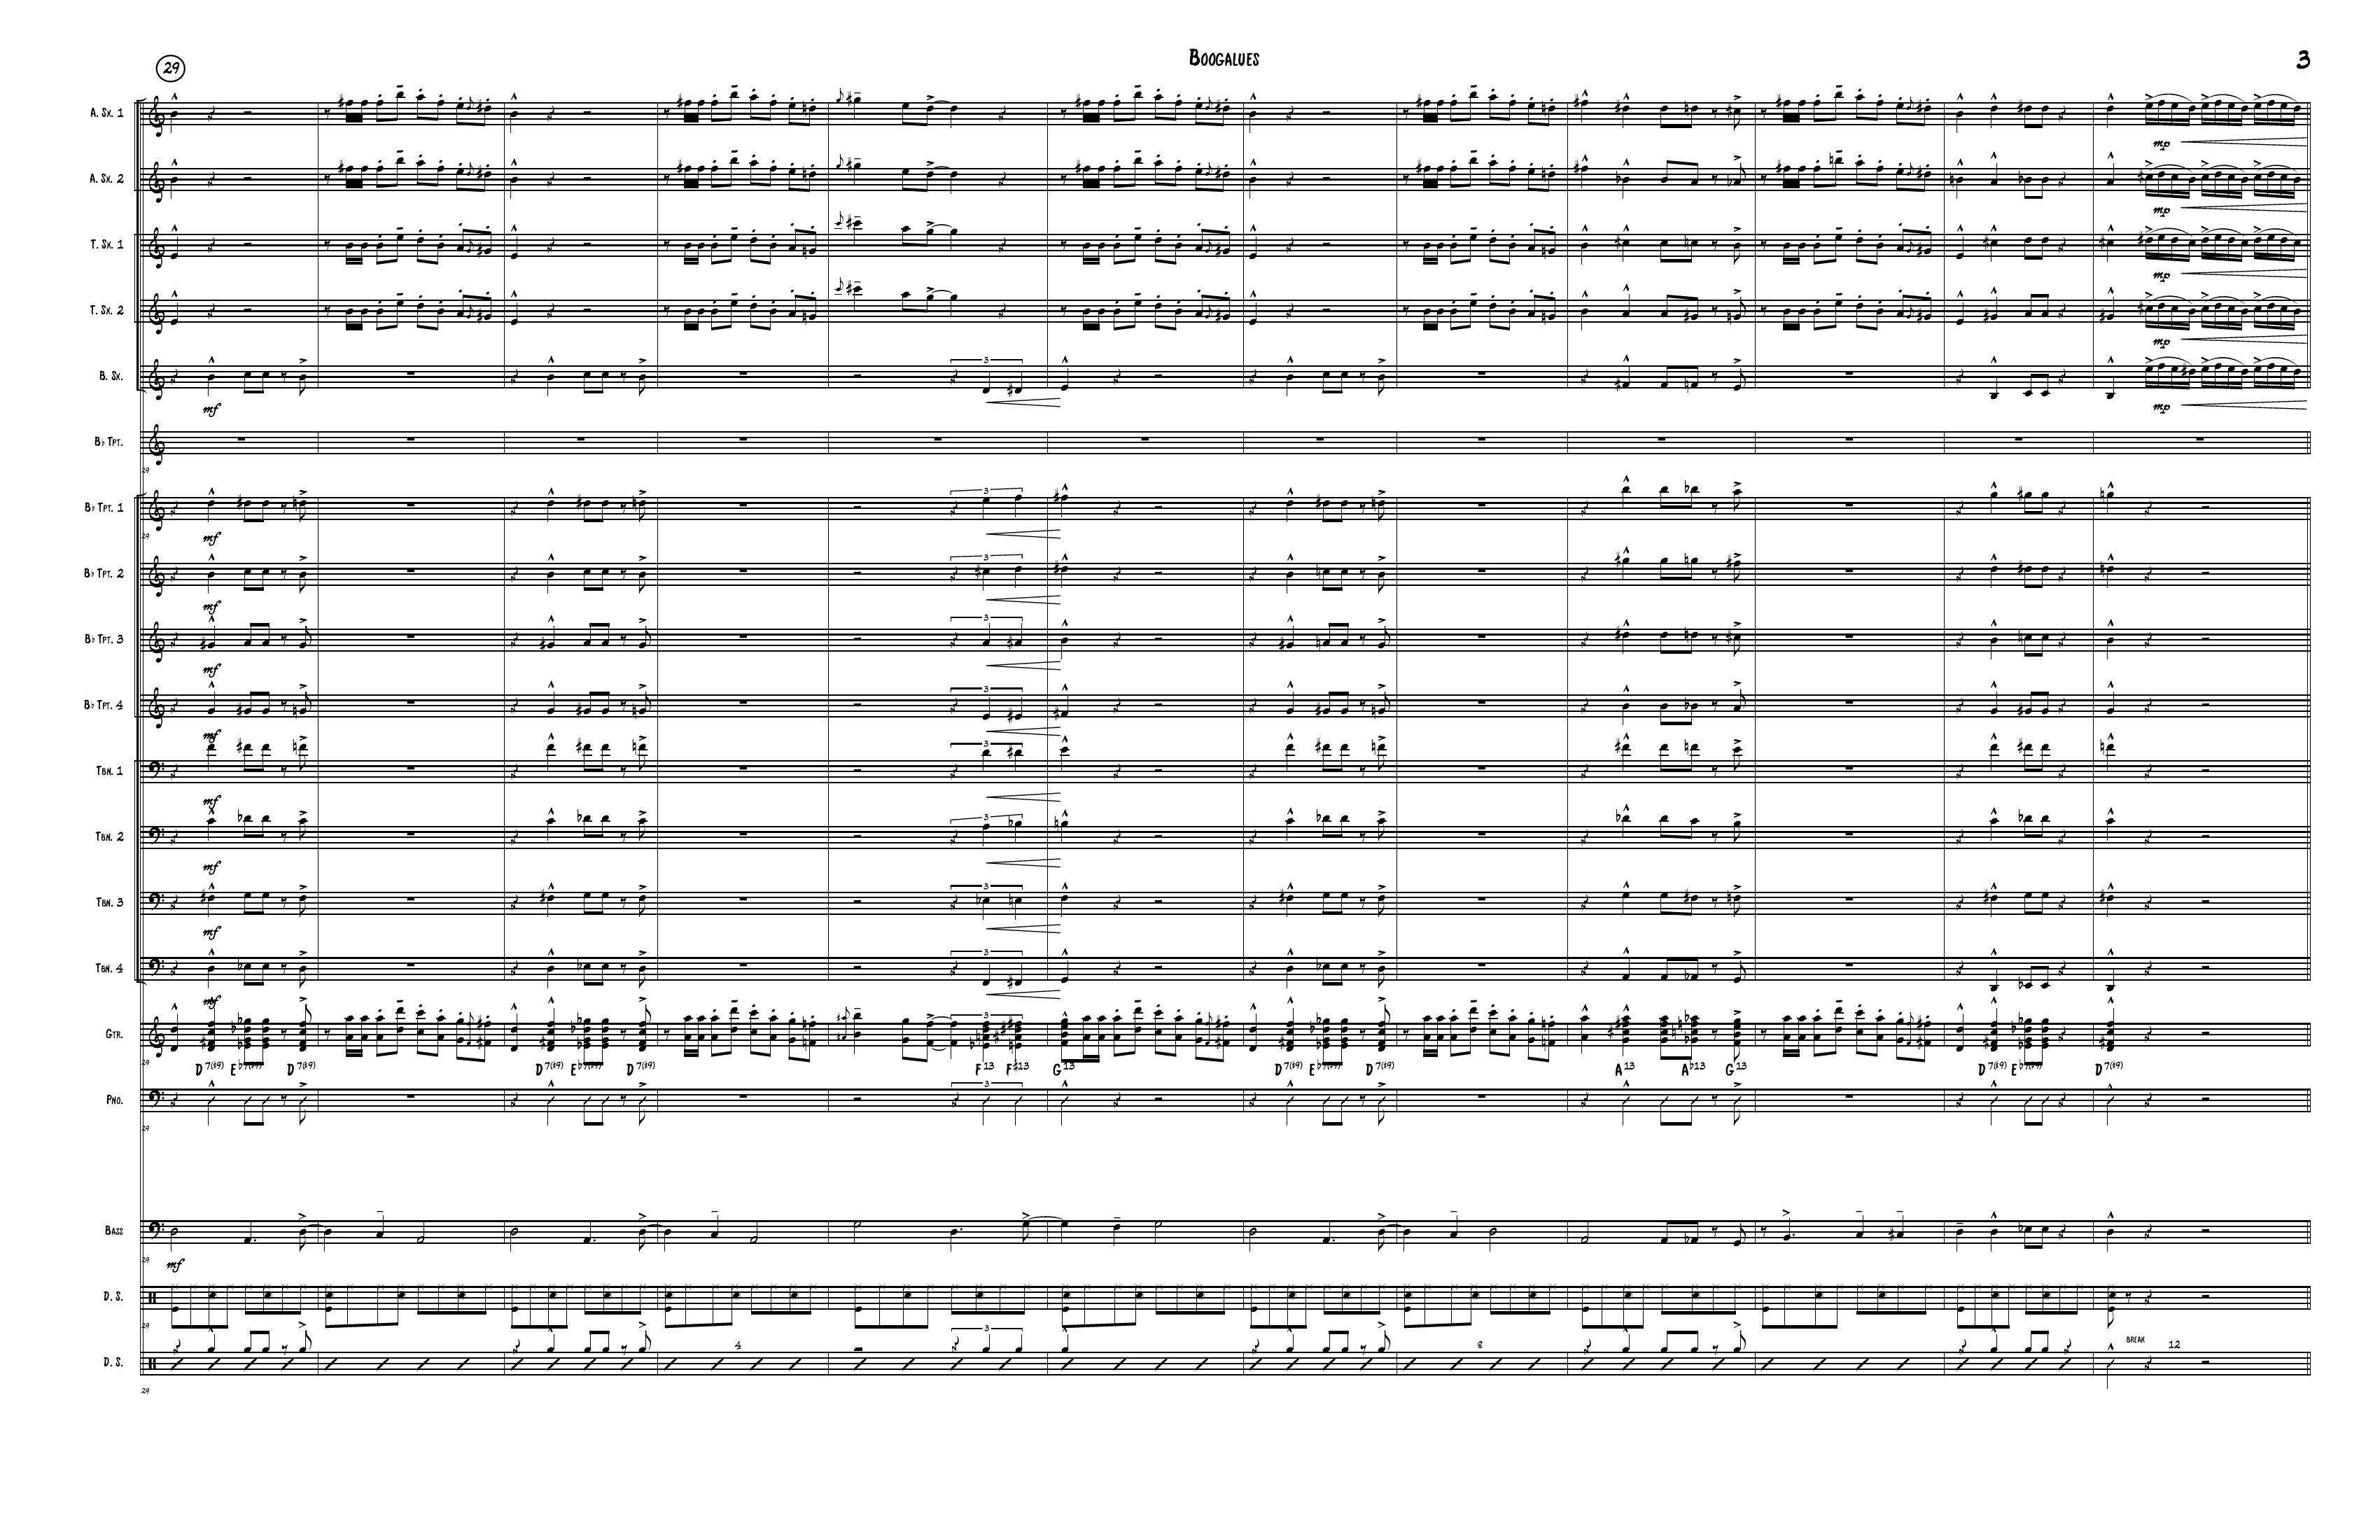 Count Basie Big Band Score Pdf